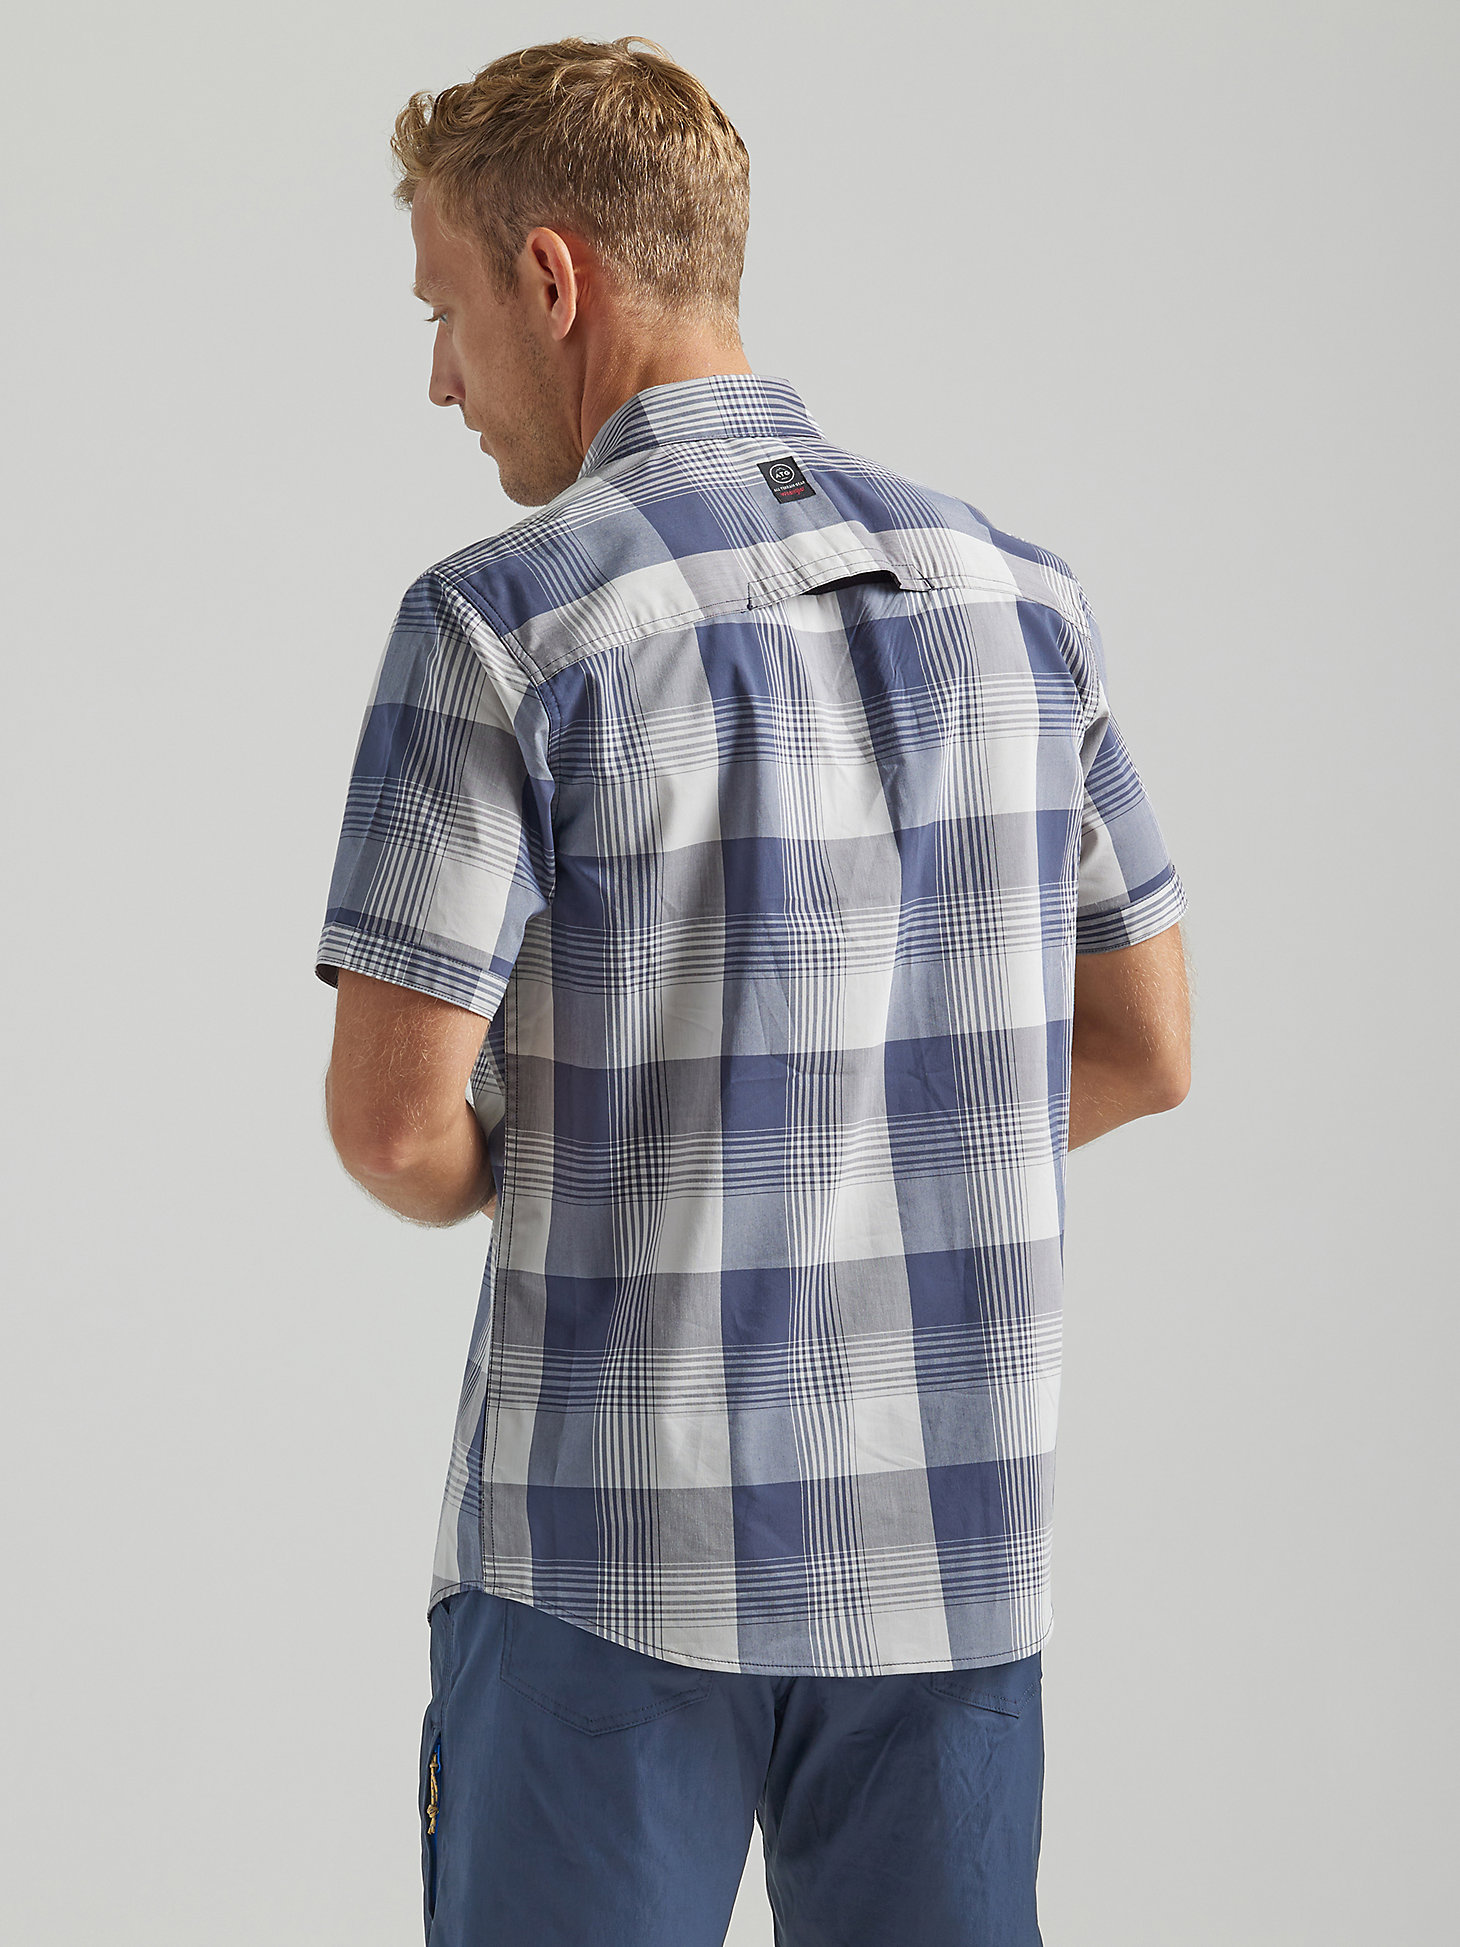 ATG By Wrangler™ Men's Asymmetrical Zip Pocket Plaid Shirt in Mist alternative view 2